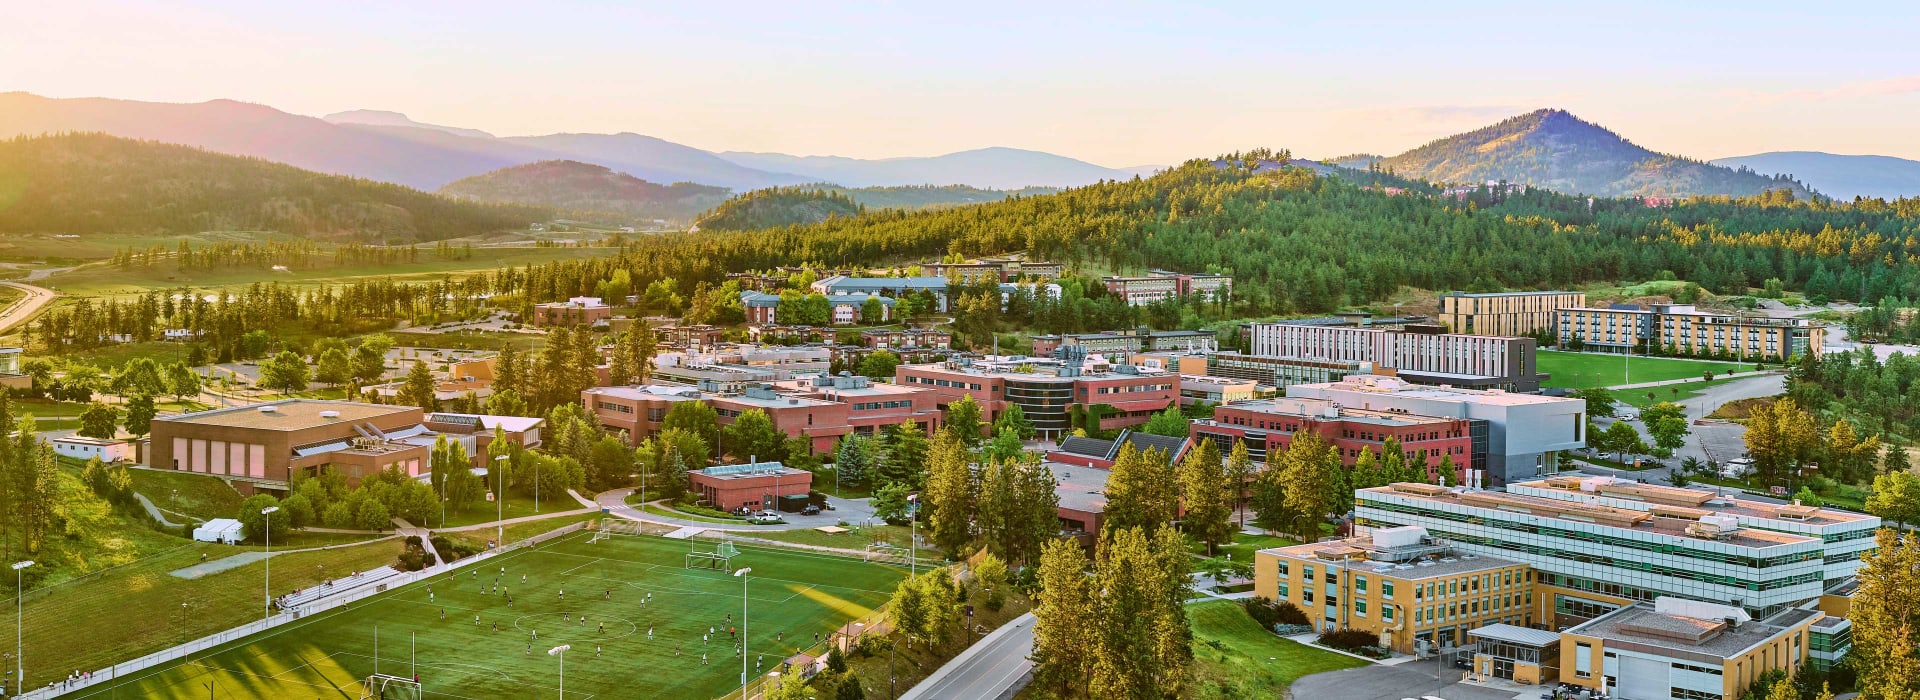 Okanagan UBC Campuses The University of British Columbia